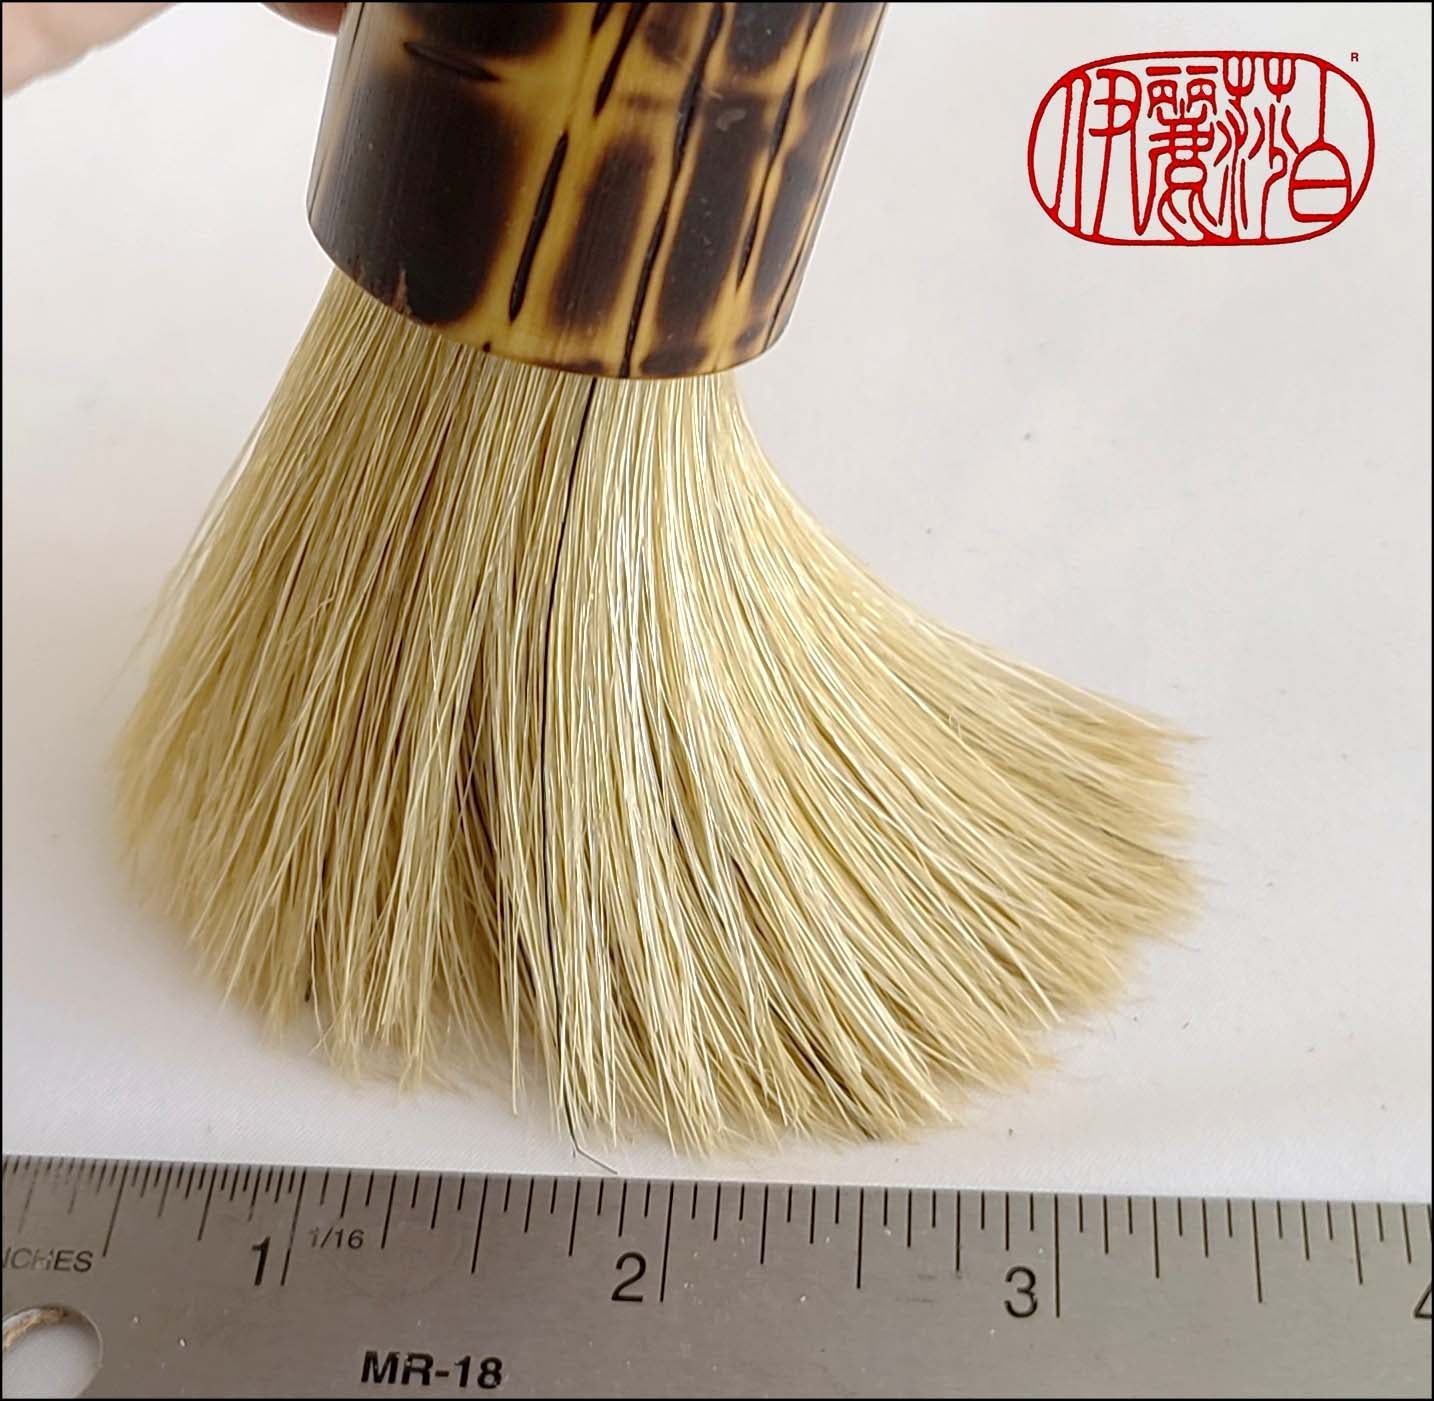 Boars Hair Paintbrush with Bamboo Handle Art & Crafting Materials Elizabeth Schowachert Art